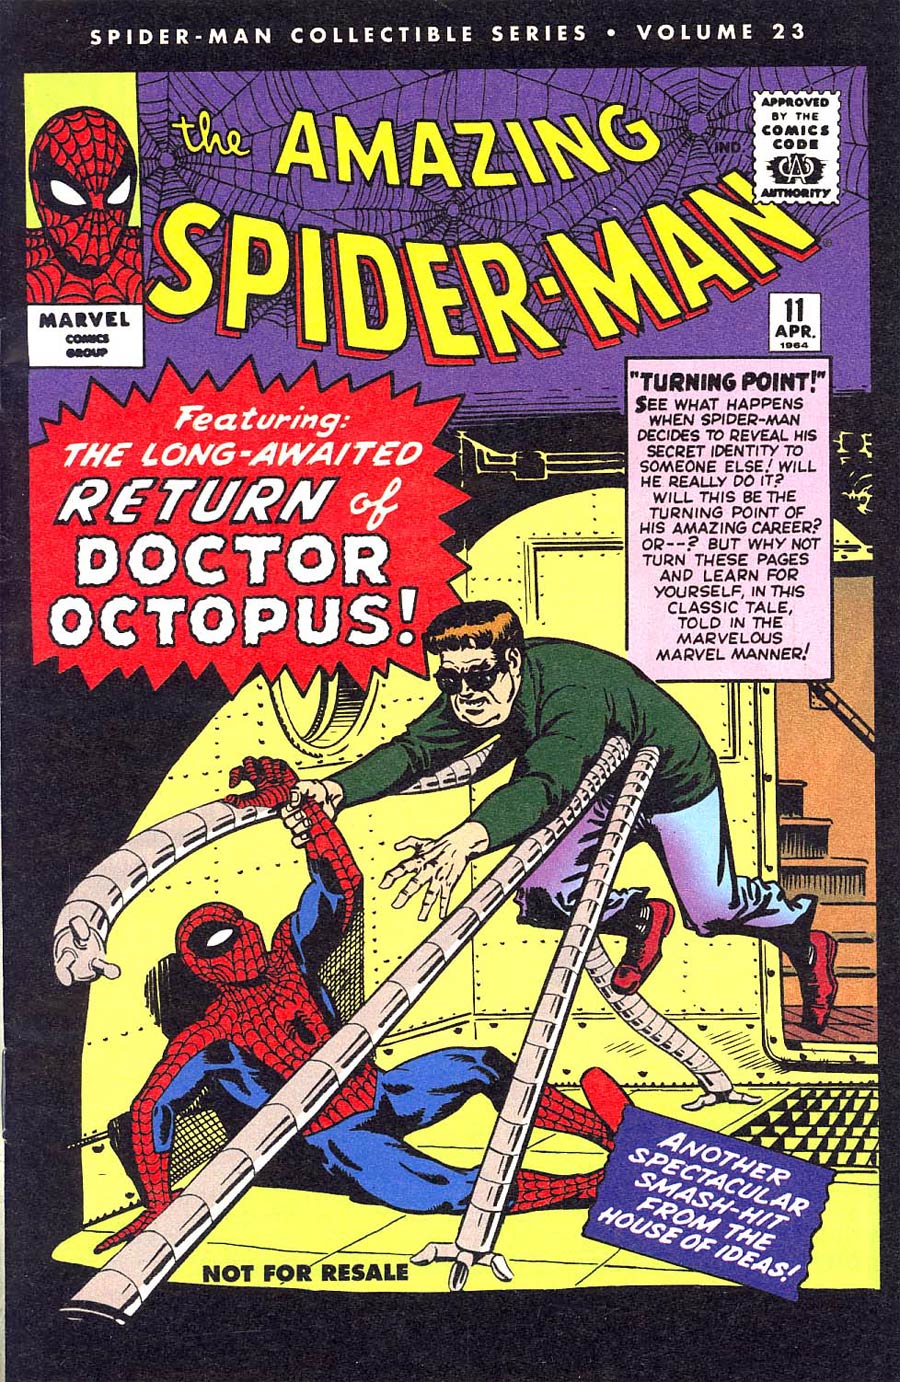 Spider-Man Collectible Series #23